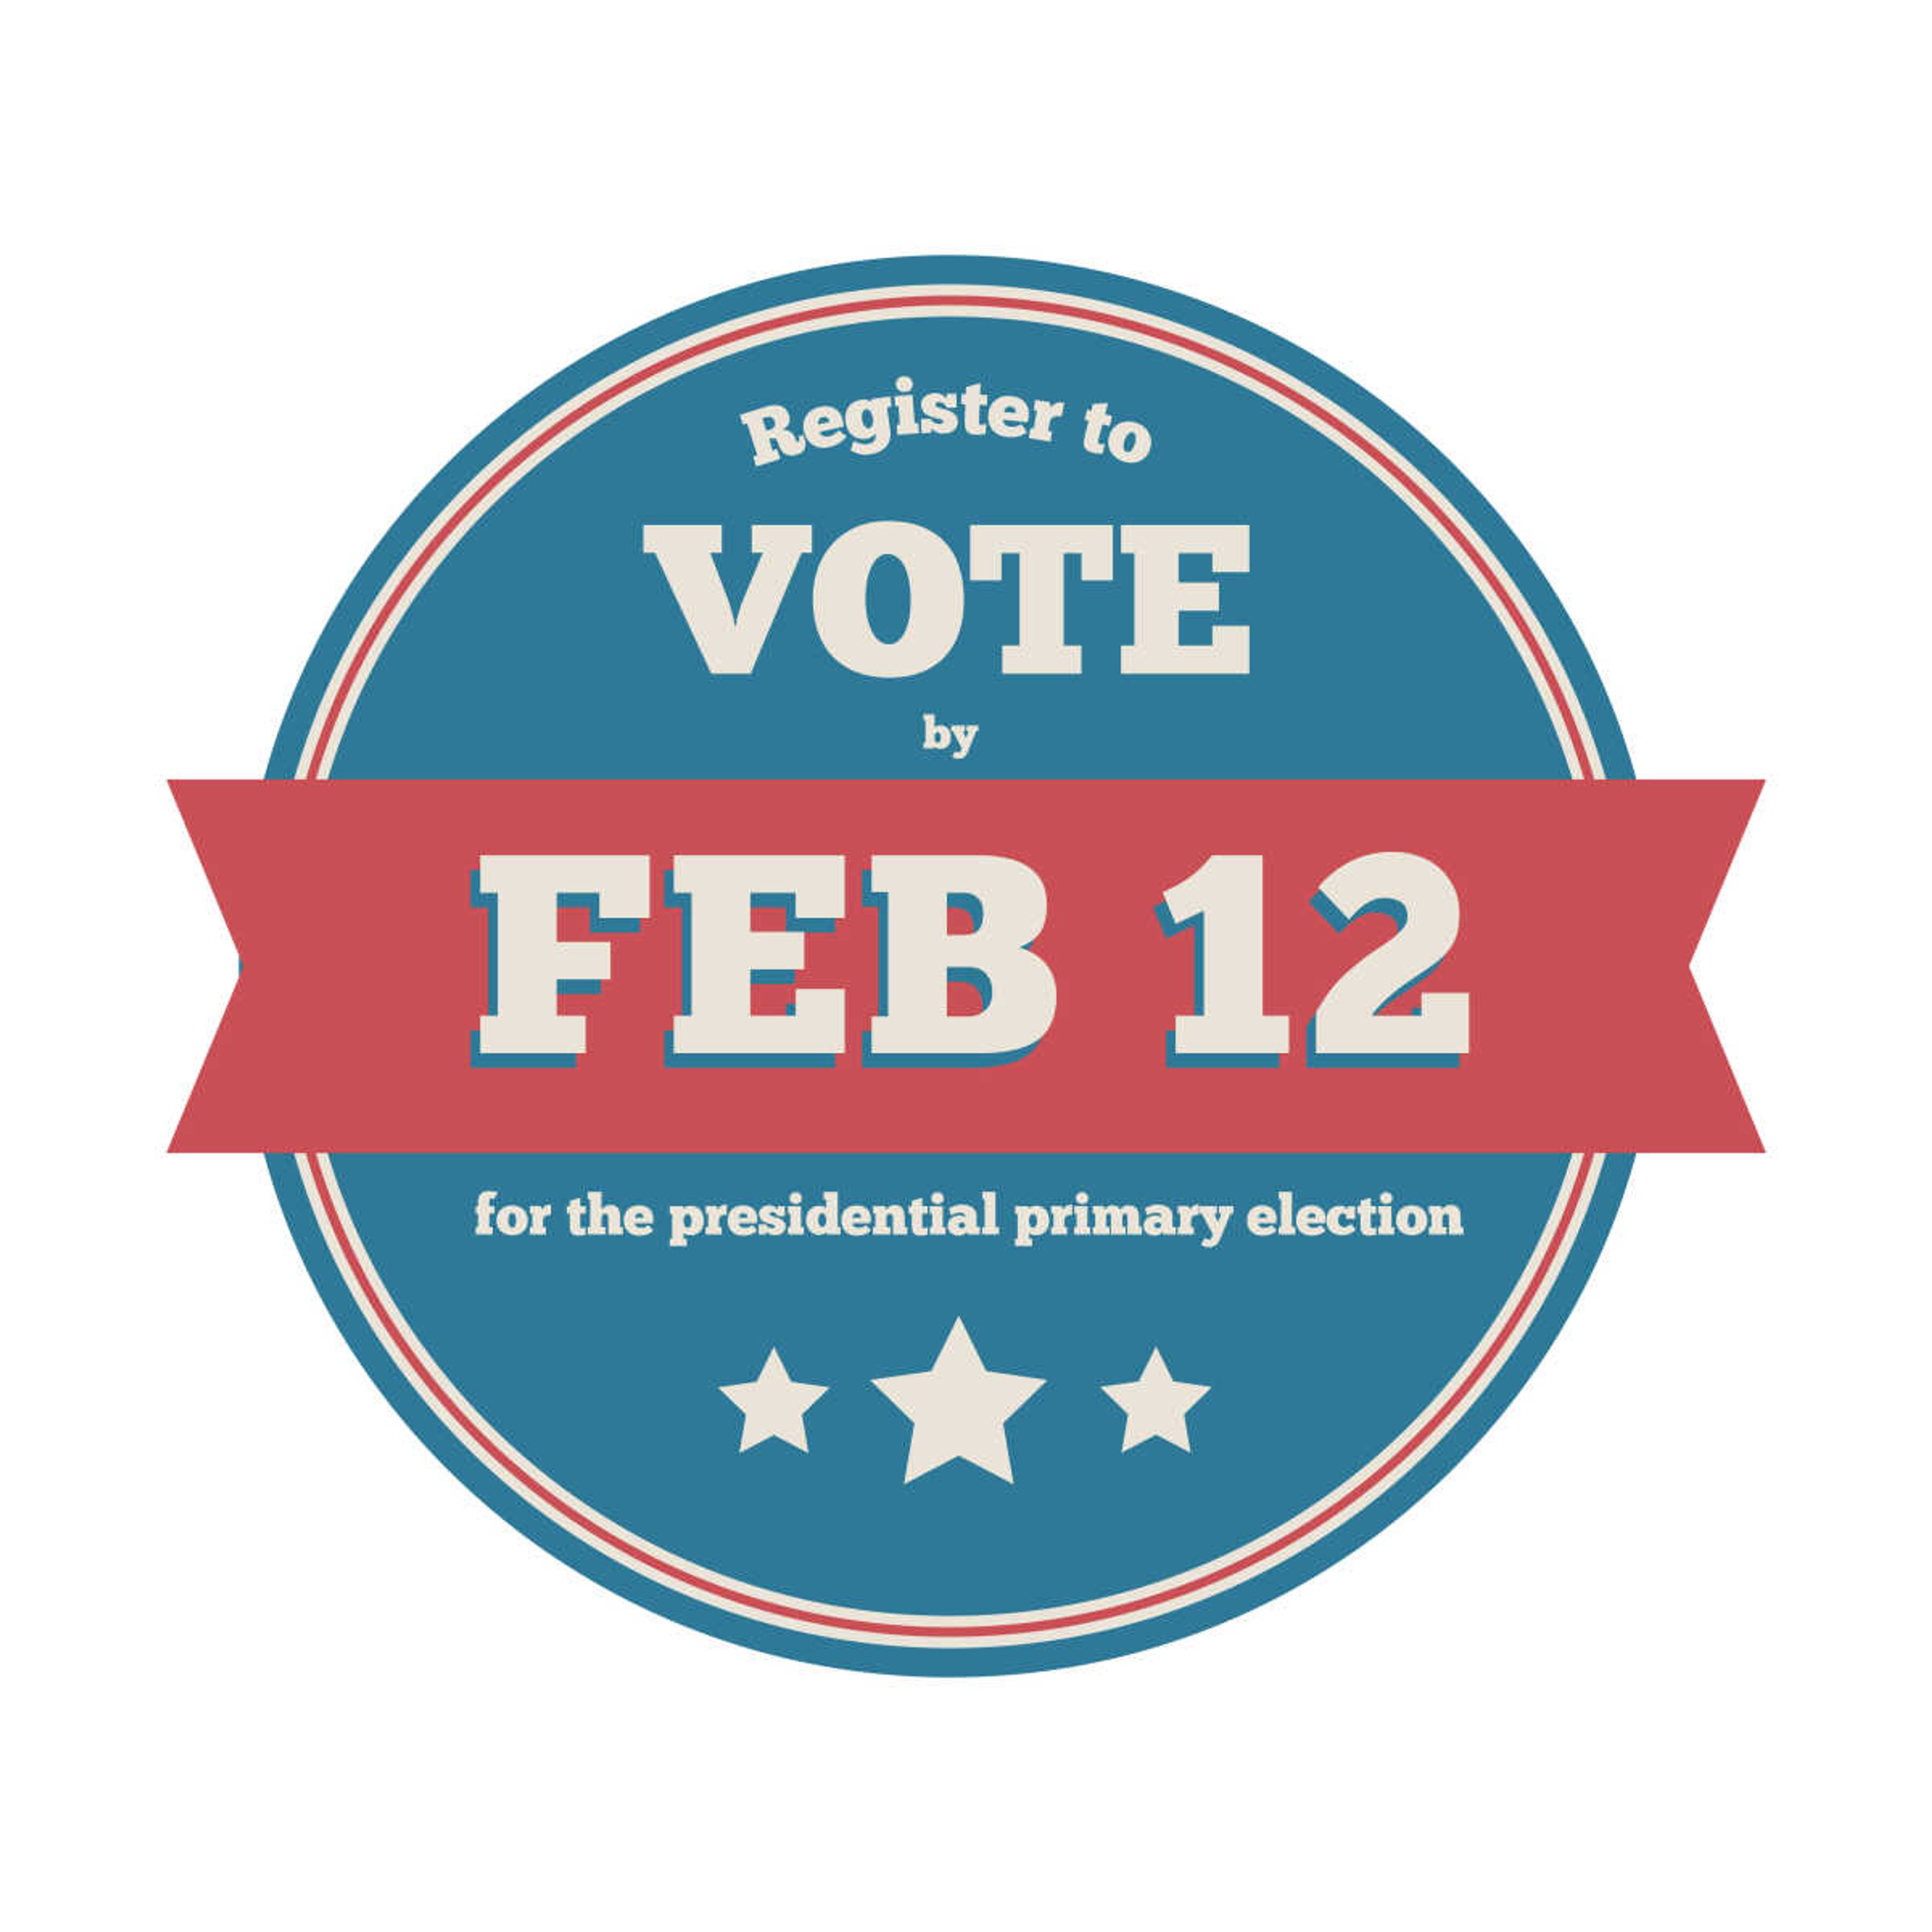 Voter registration for U.S. primaries closes on Feb. 12